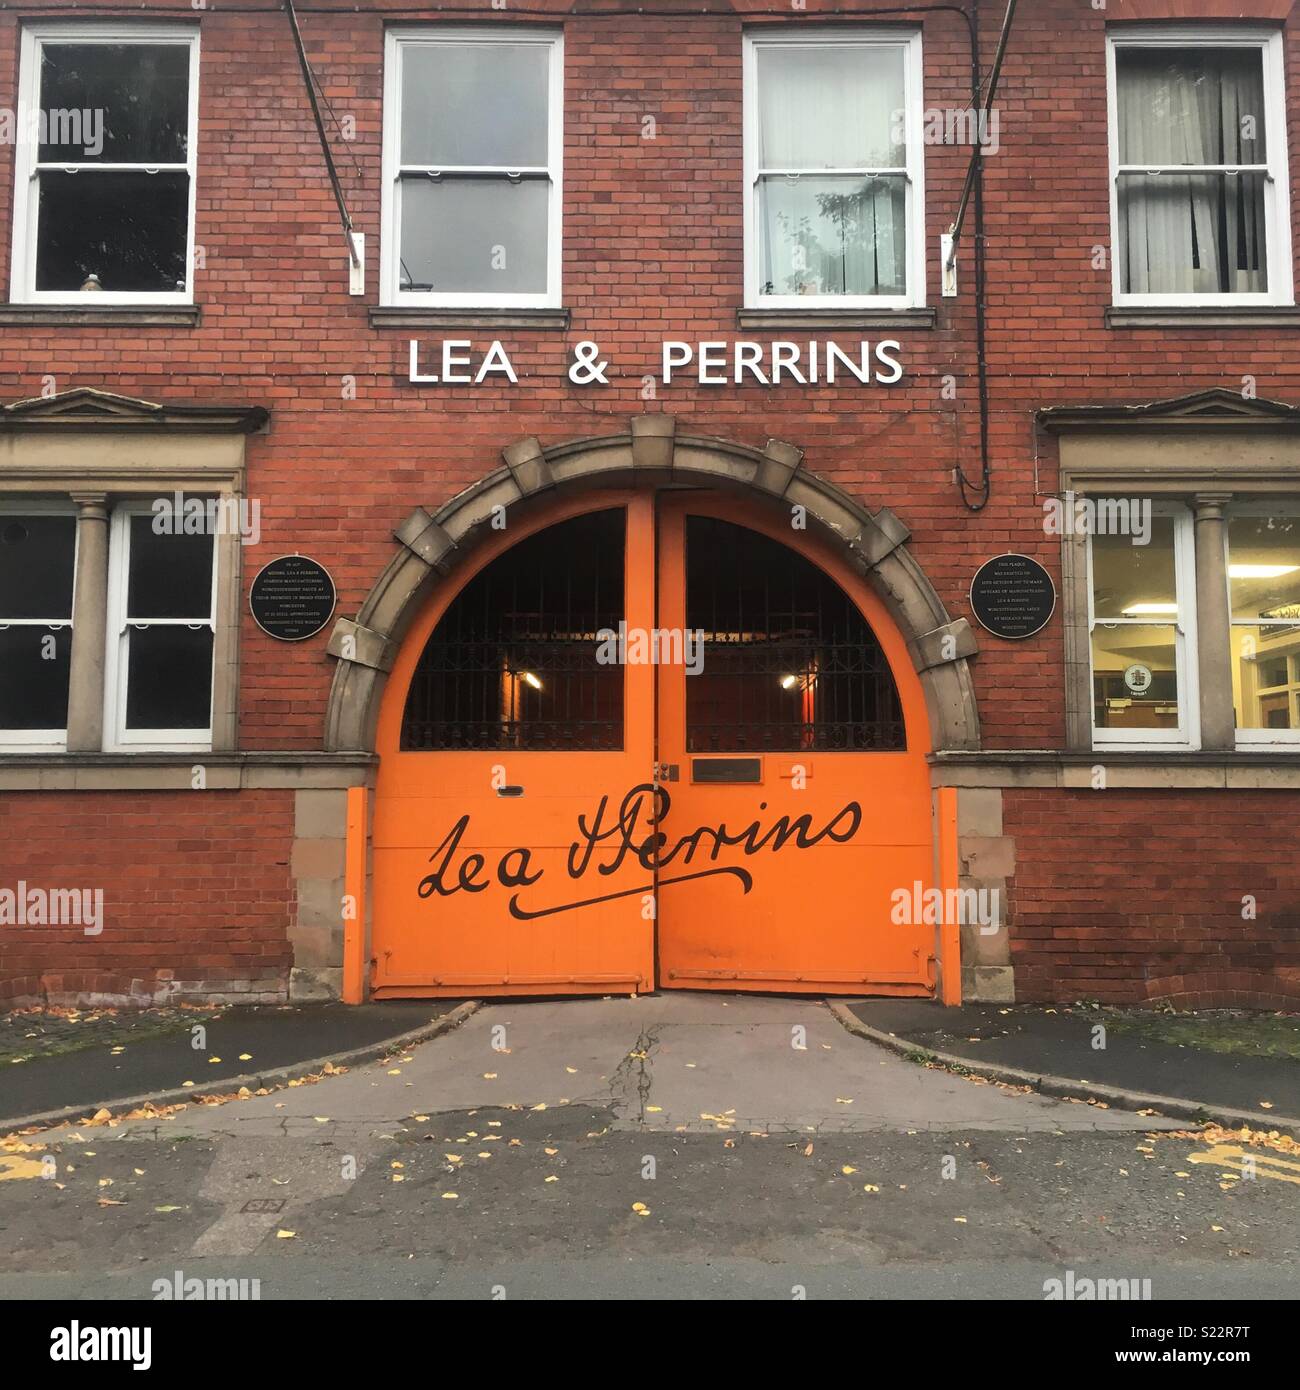 Lea & Perrins sauce Worcestershire Factory Banque D'Images